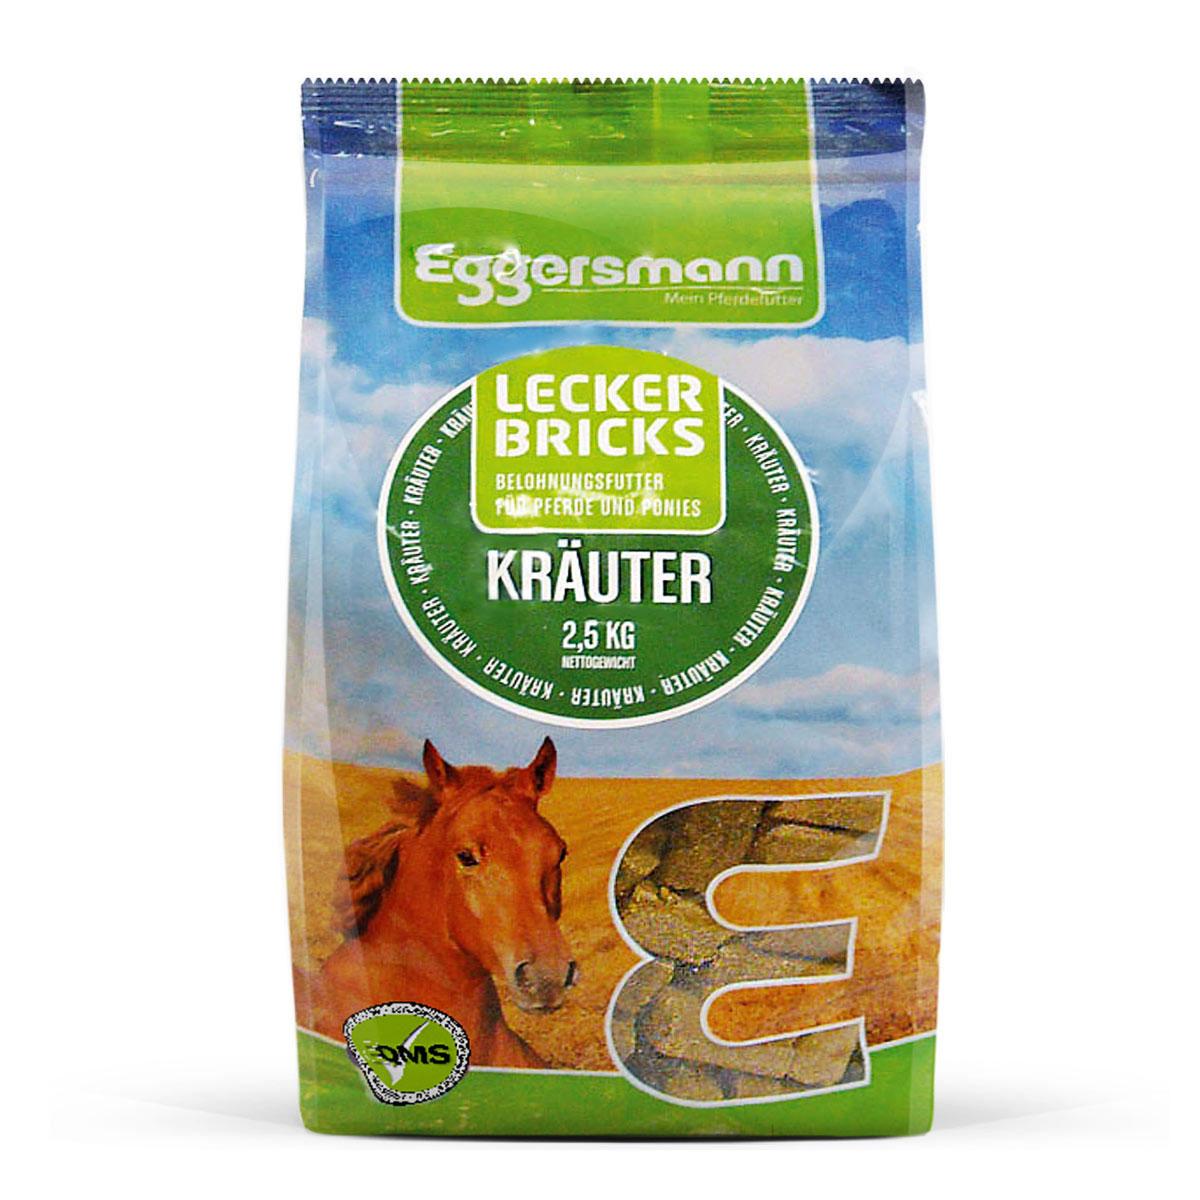 Eggersmann Lecker Bricks Kräuter 2,5 kg